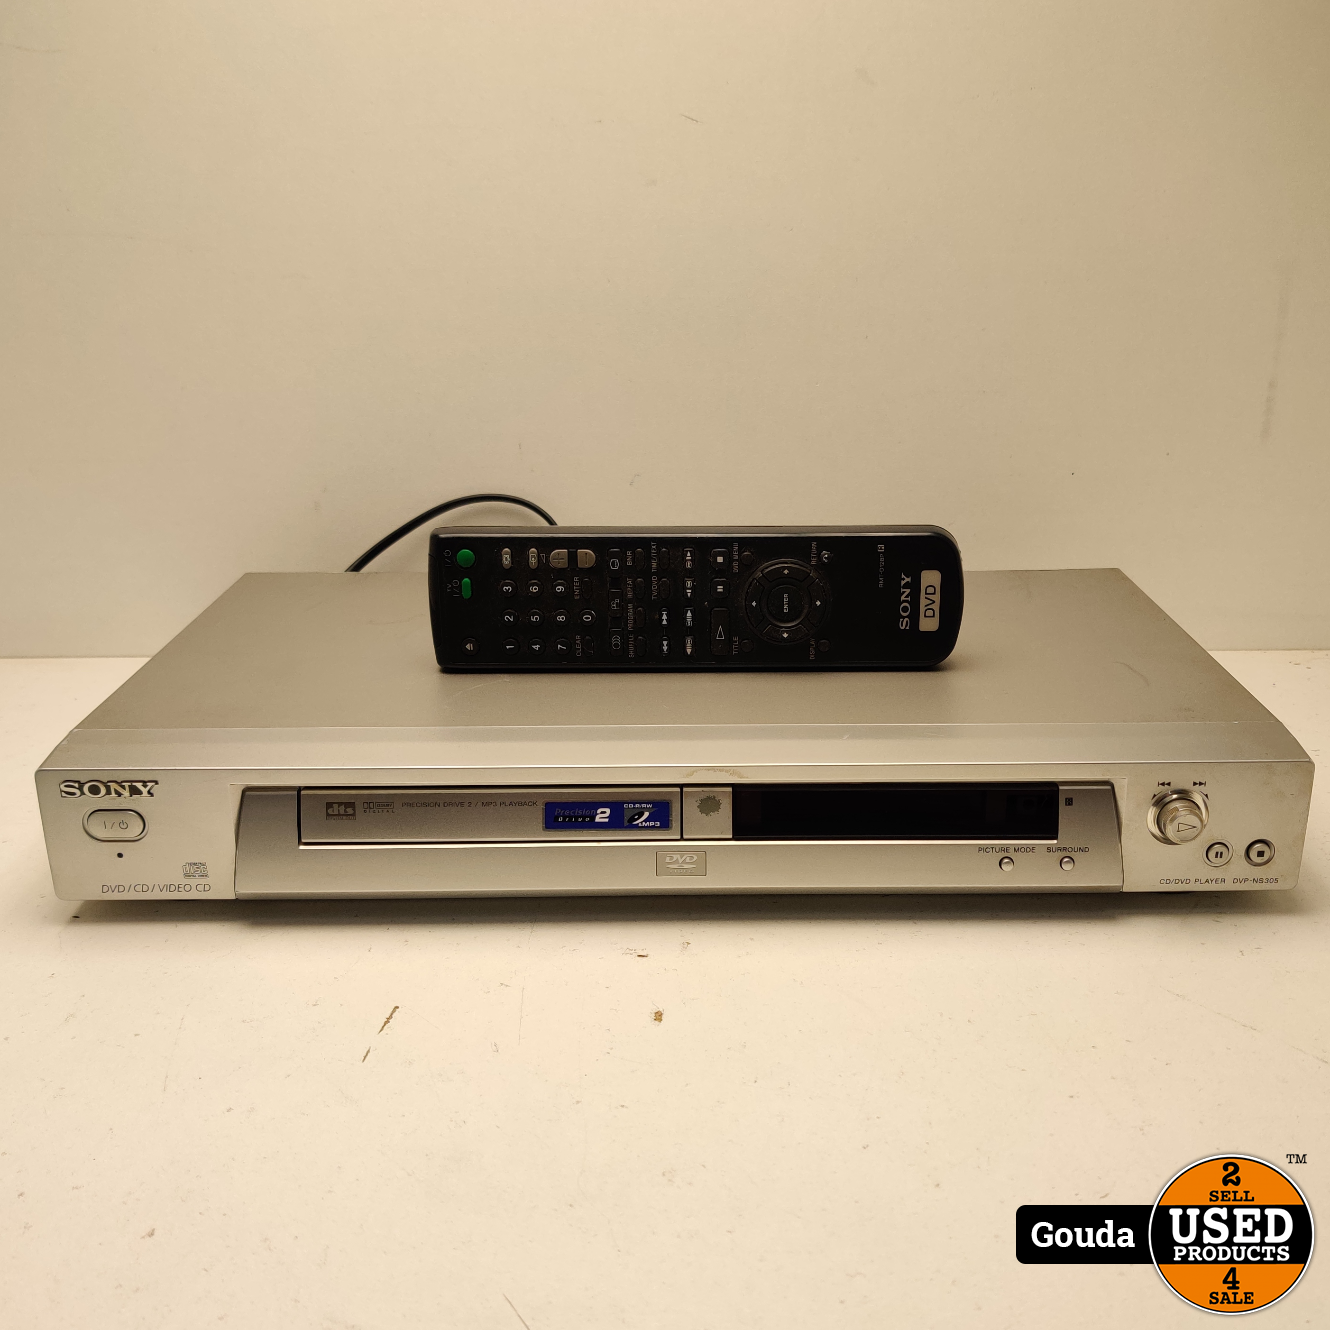 Accumulatie strijd atmosfeer Sony DVP-NS305 DVD speler - Used Products Gouda